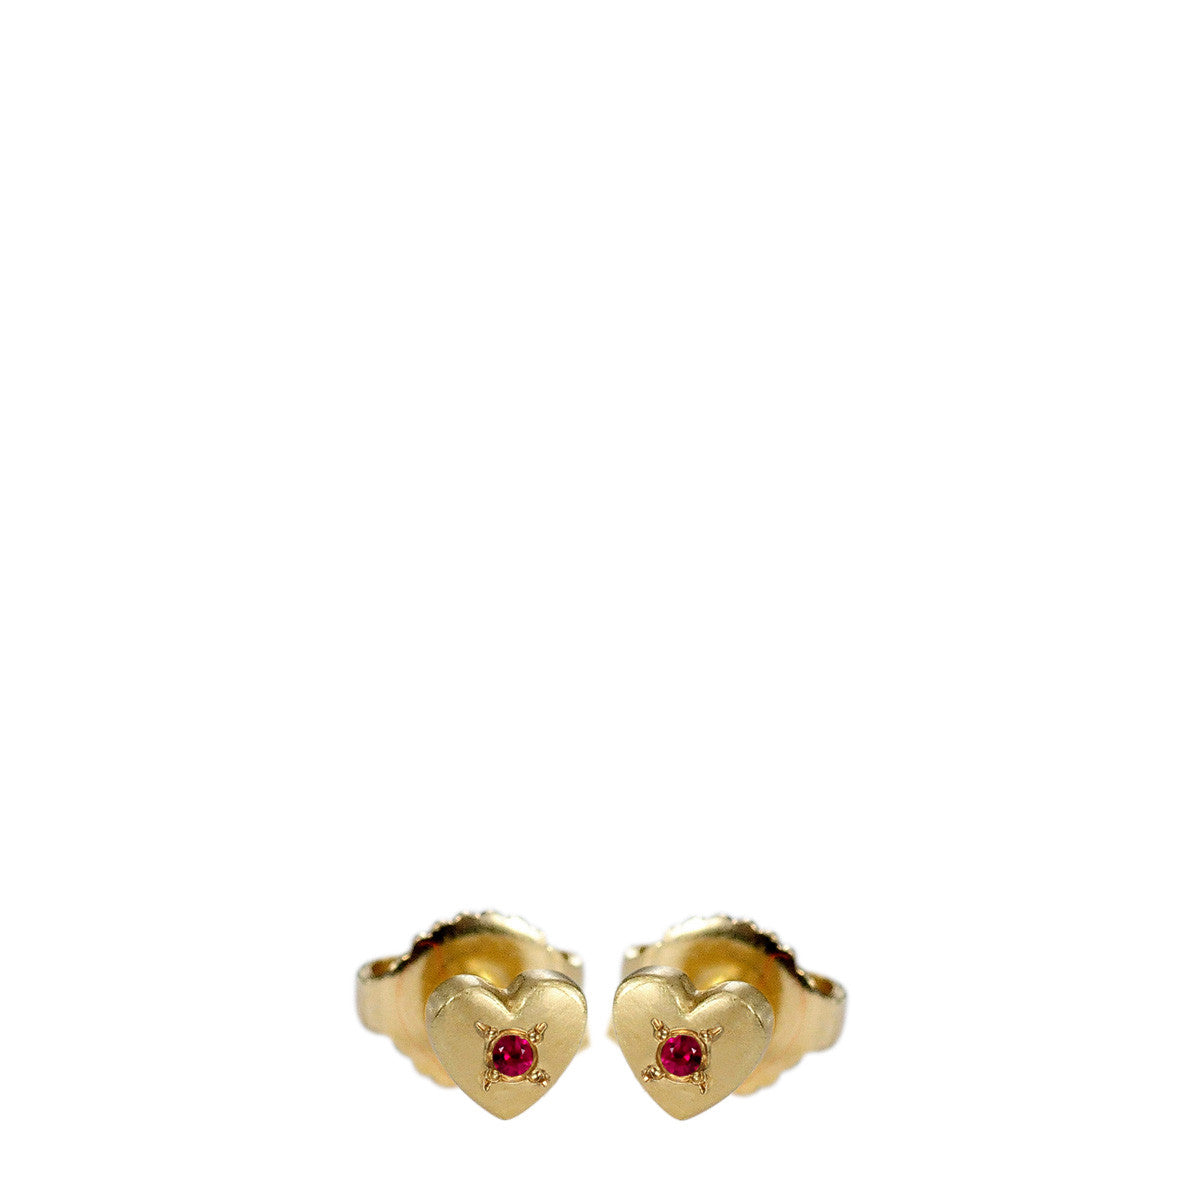 18K Gold Heart Stud Earrings with Rubies